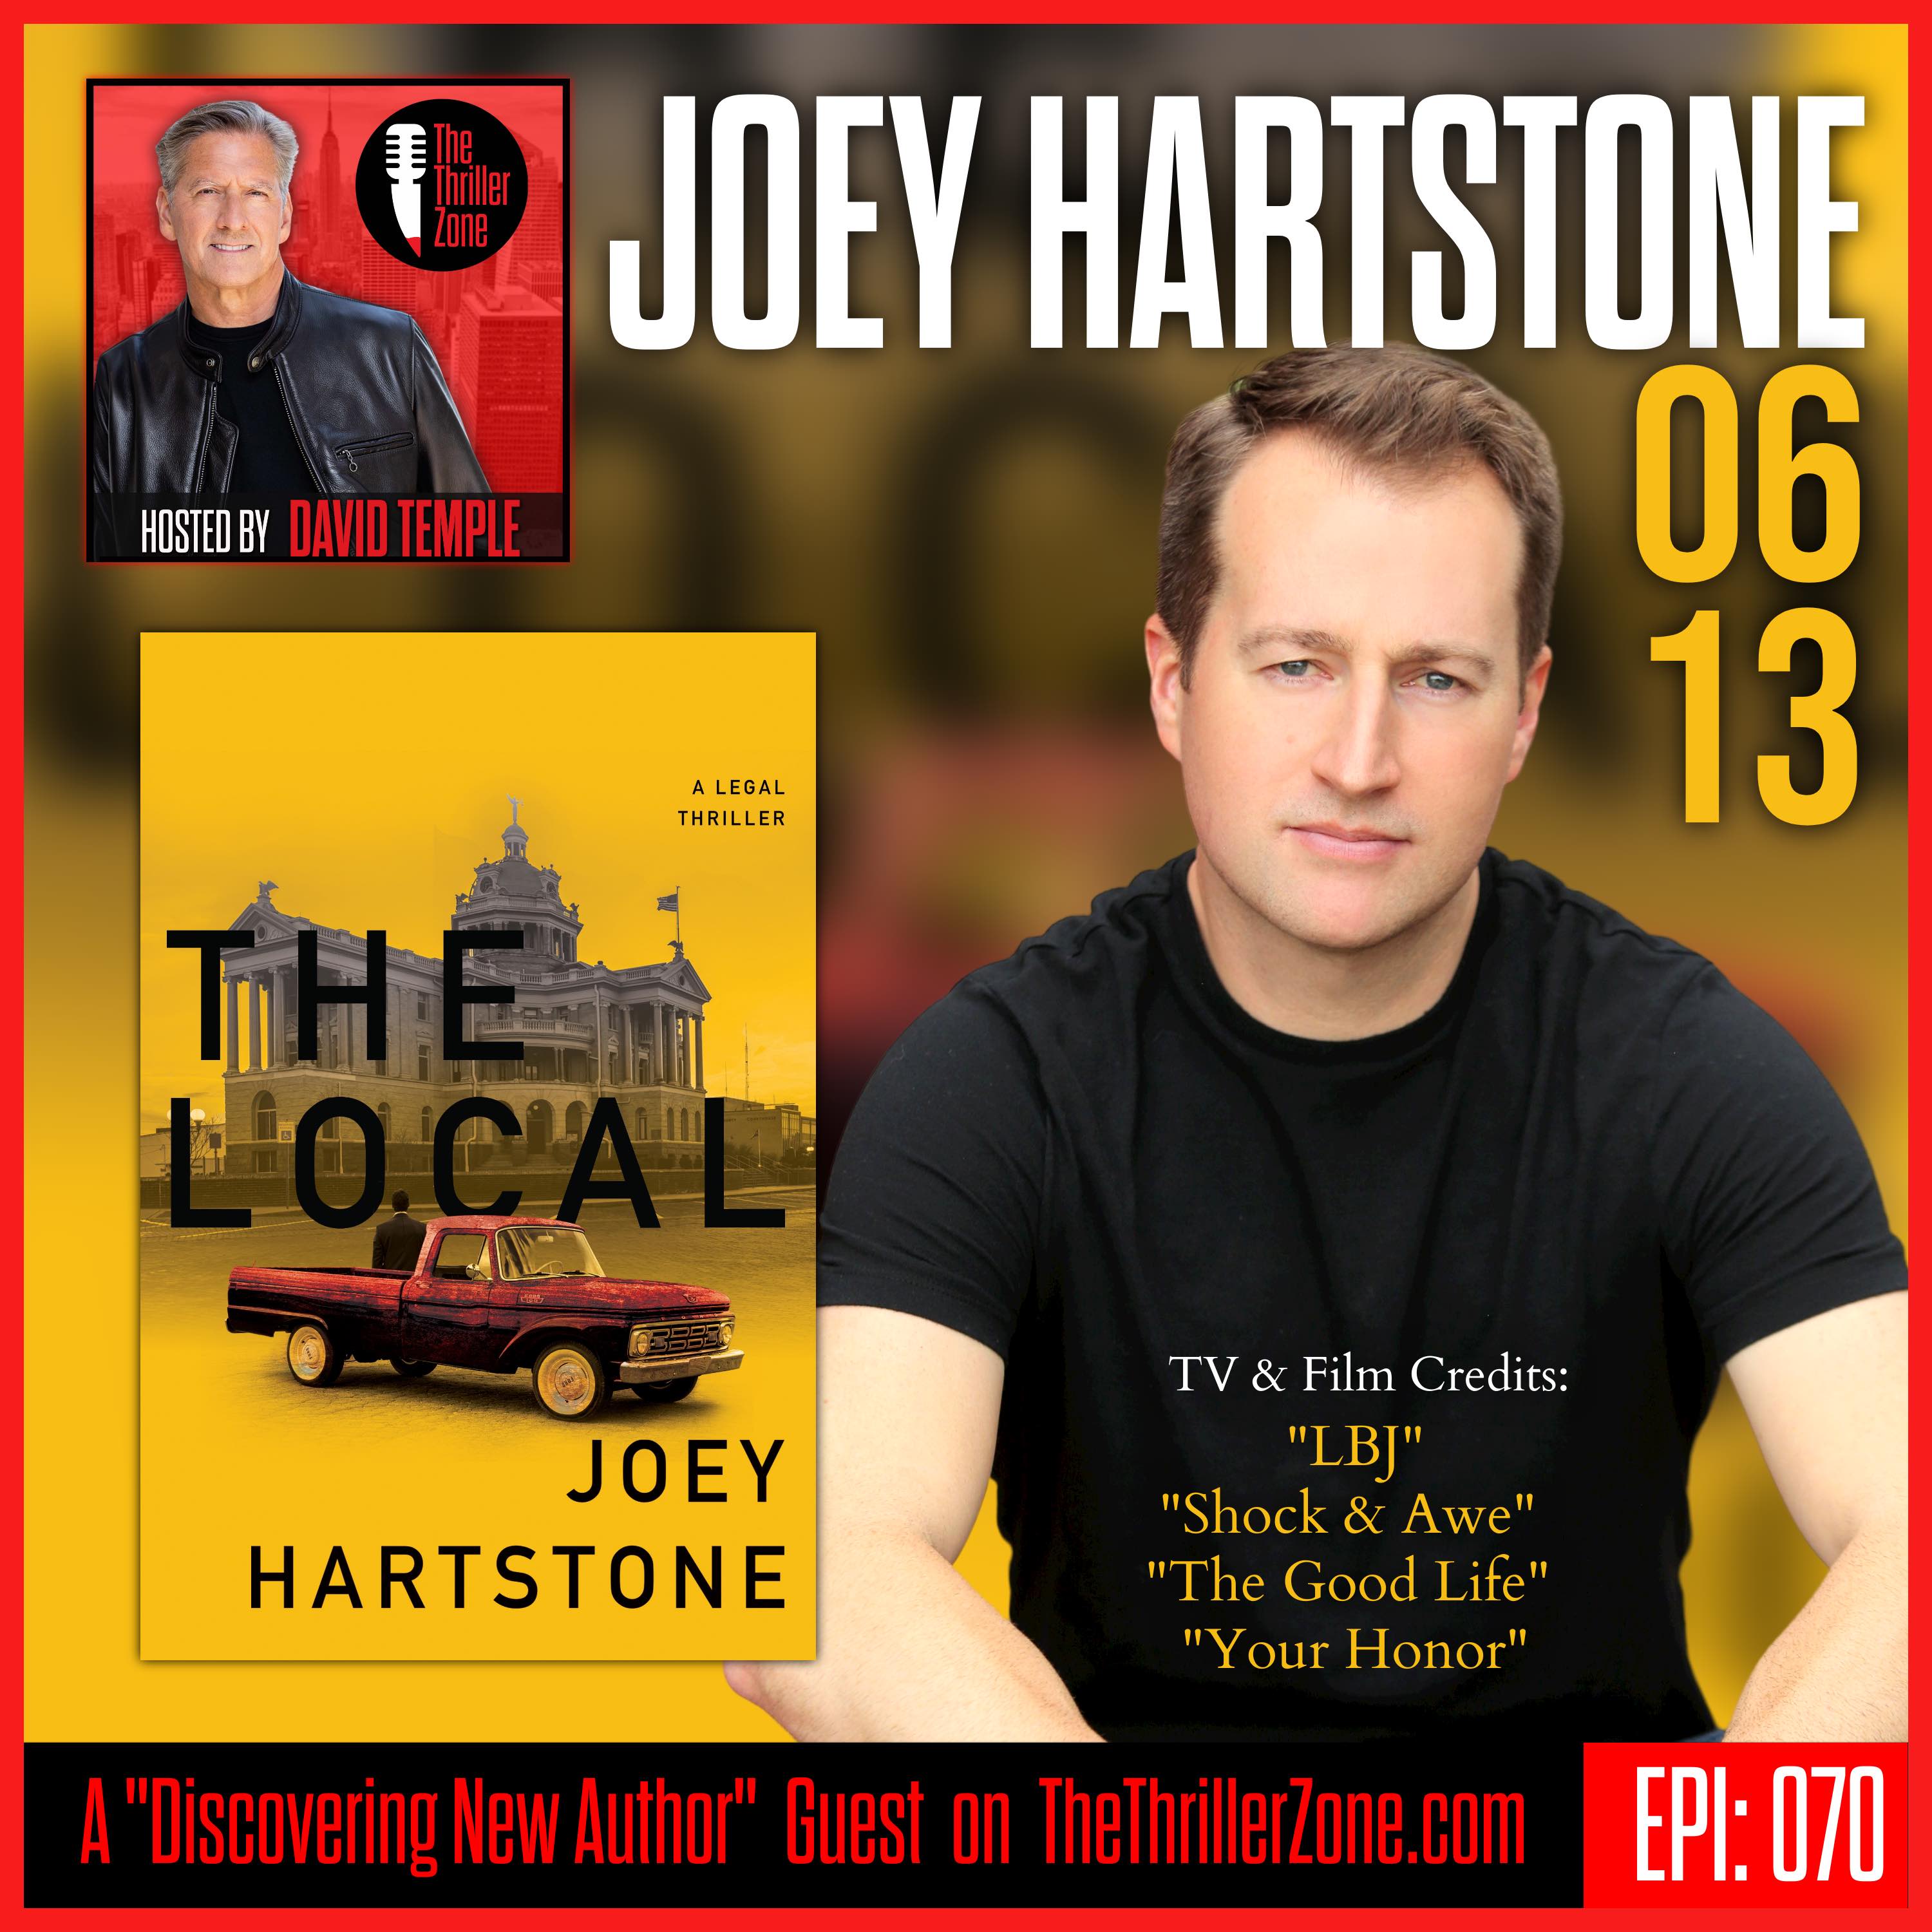 Joey Hartstone, author of The Local Image